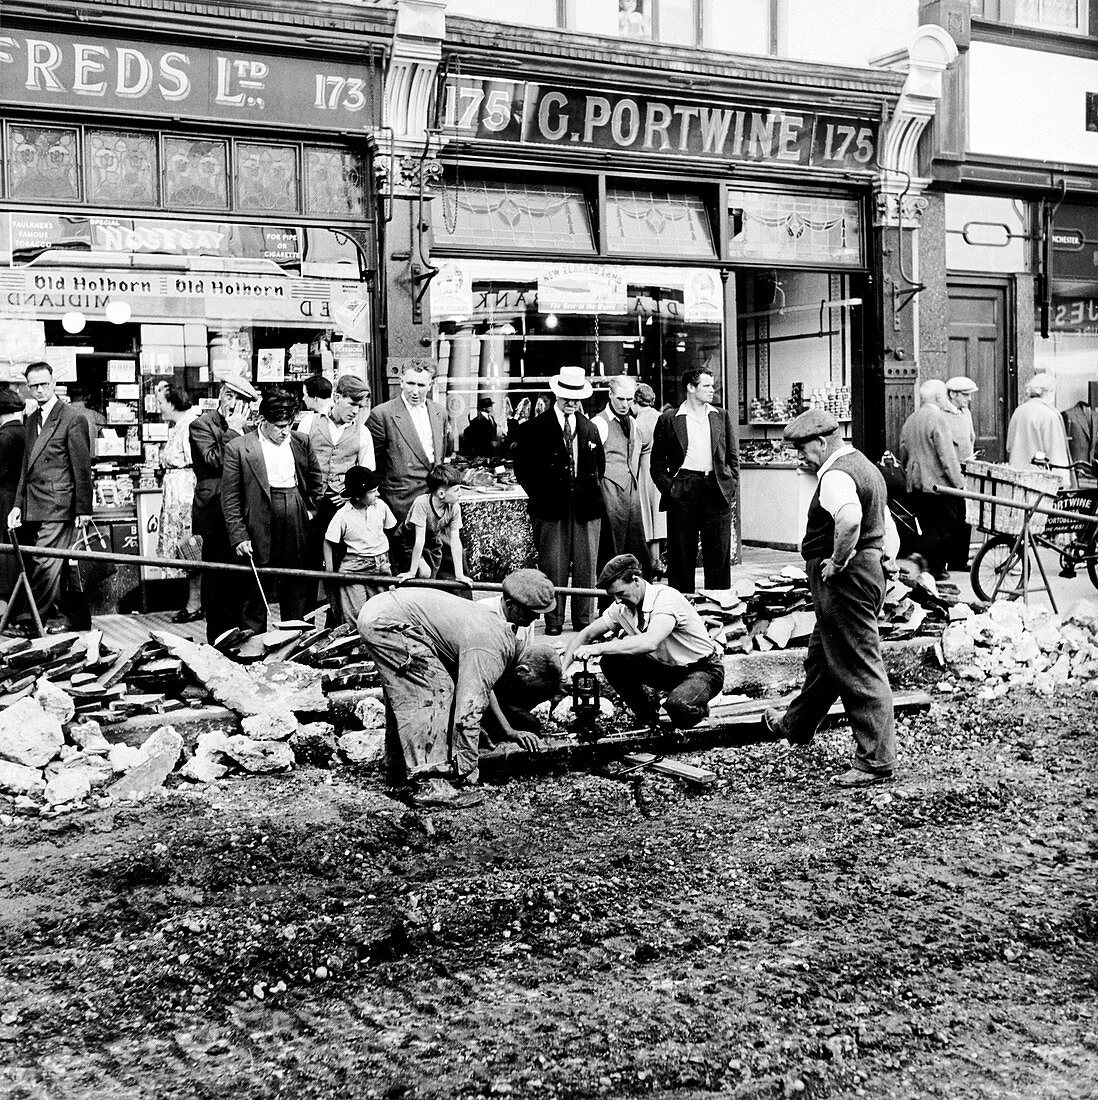 Road repairs in Portobello Road, London, c1956